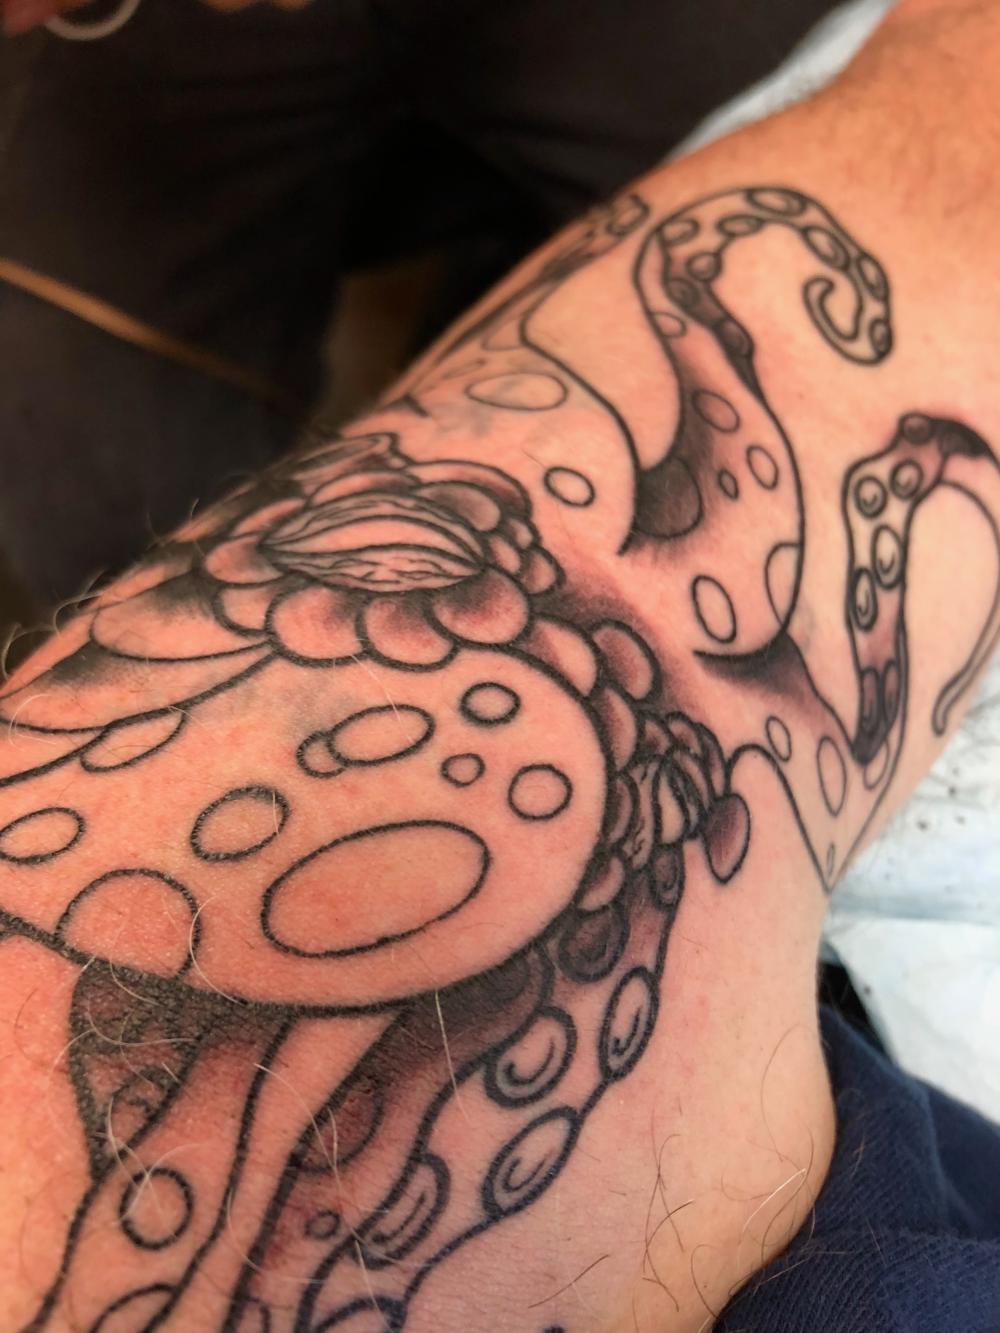 Octopus shaded tattoo